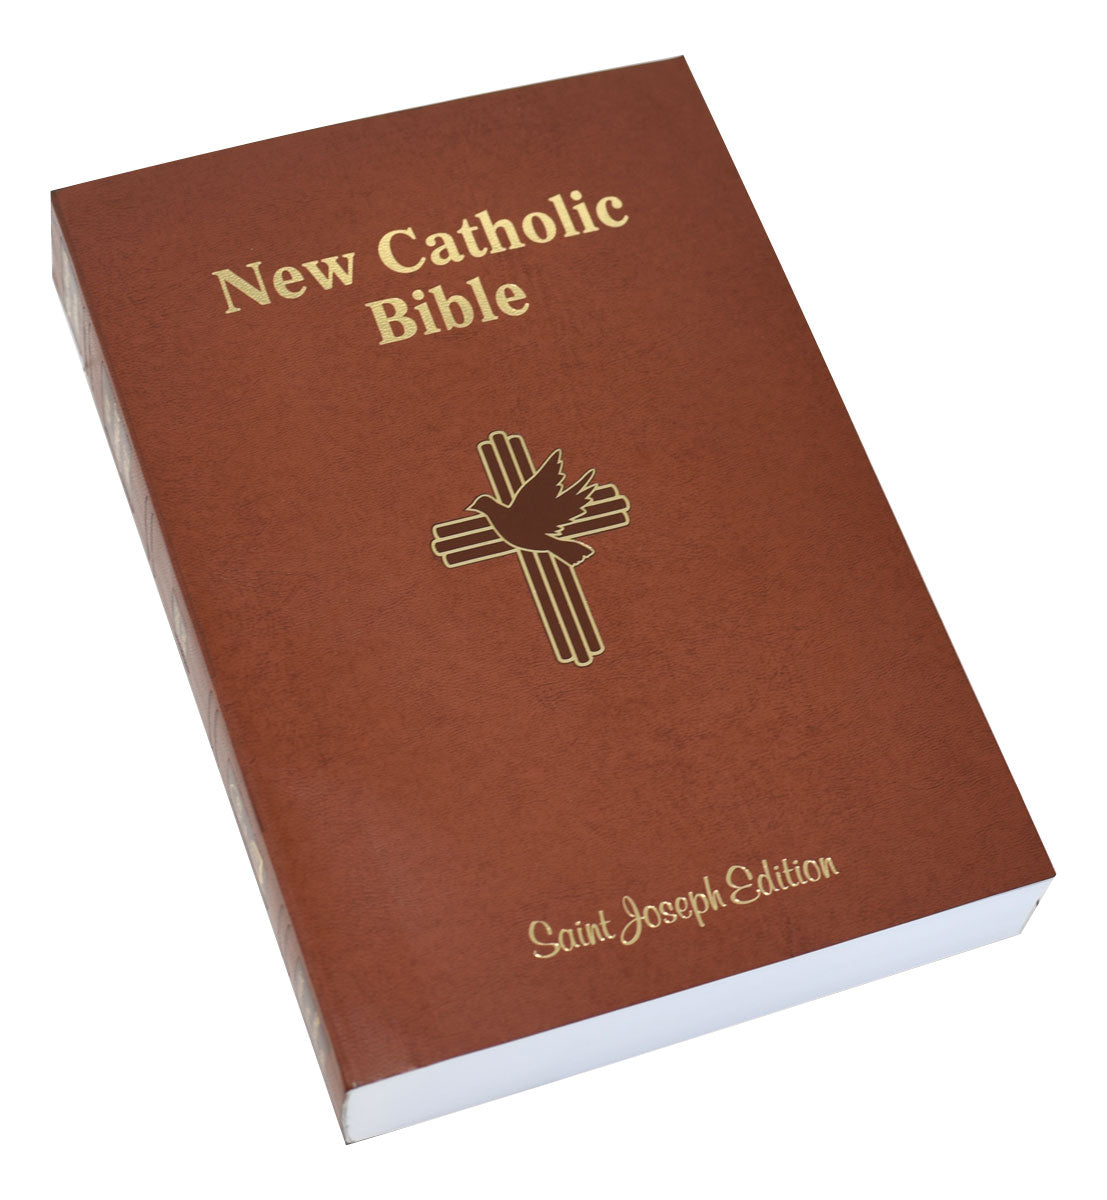 New Catholic Bible Student Edition Large Print